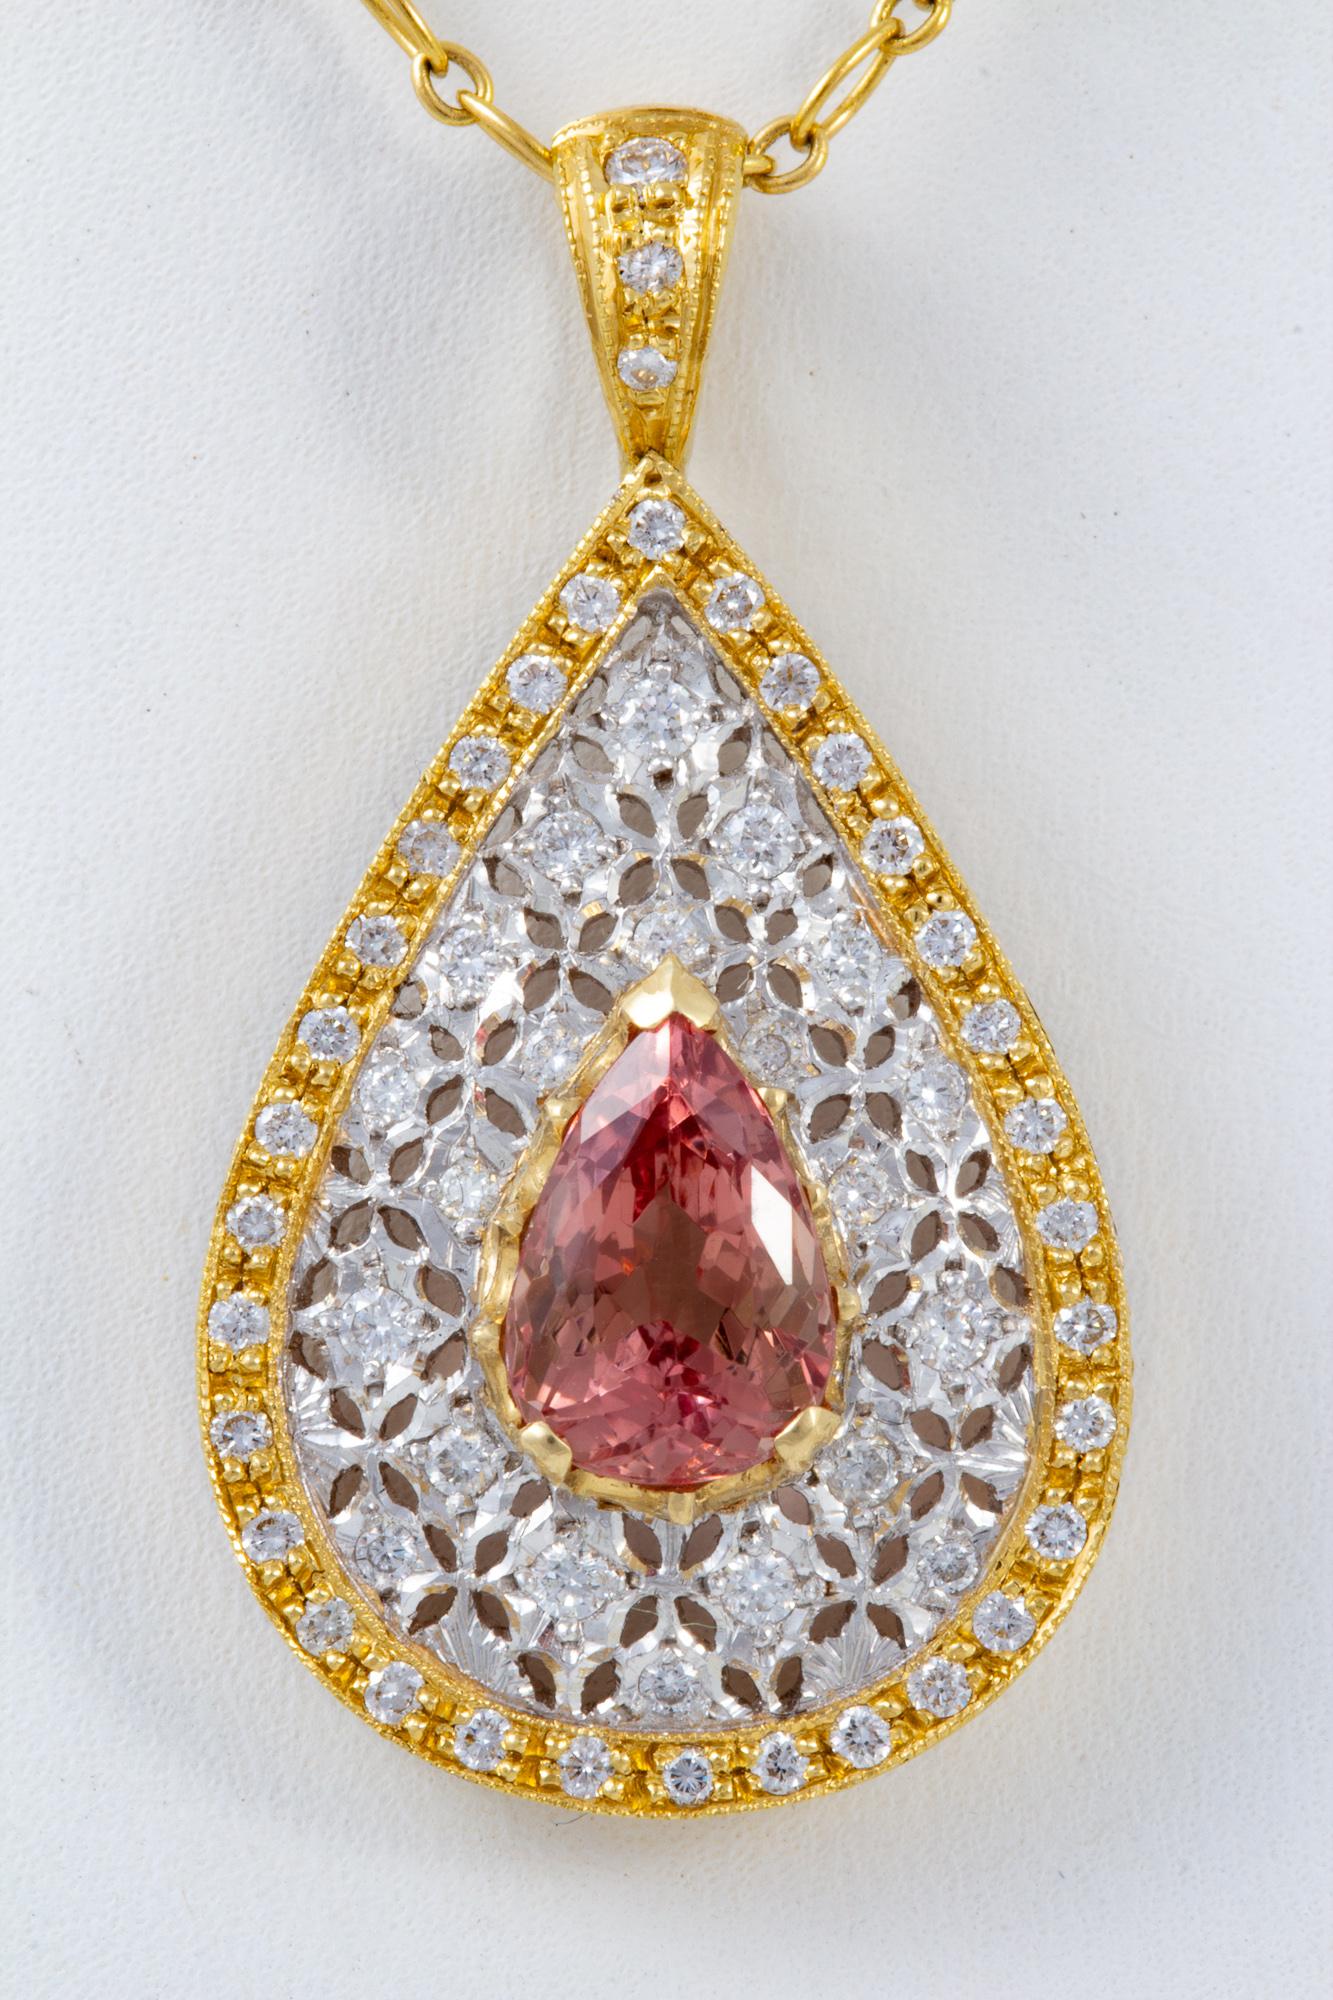 Italian Florentine Engraved Pendant Featuring 2.63 carat Imperial Topaz For Sale 3